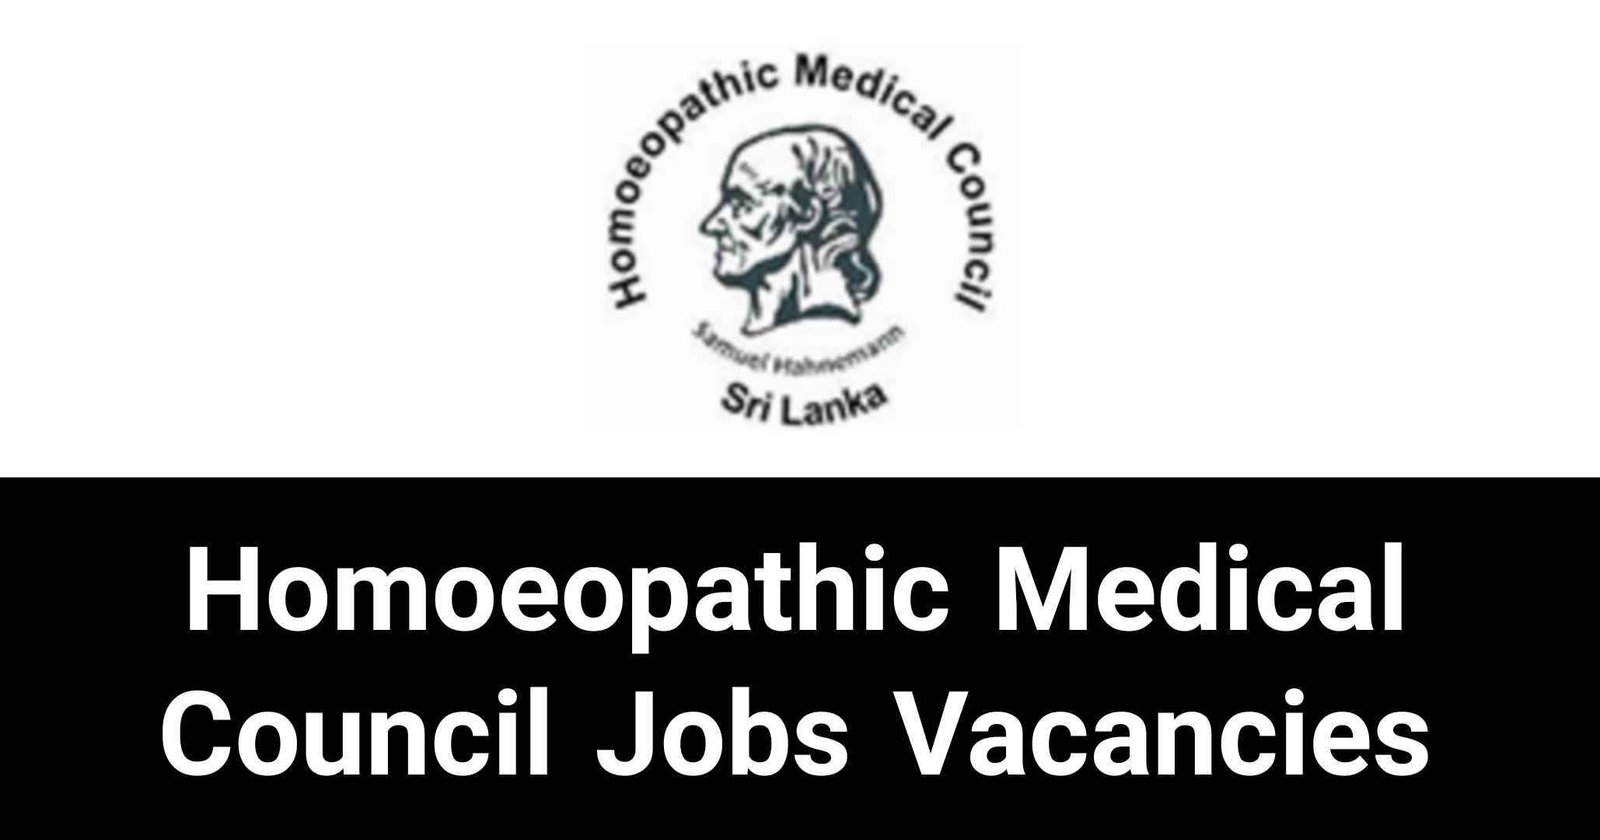 Homoeopathic Medical Council Jobs Vacancies Careers